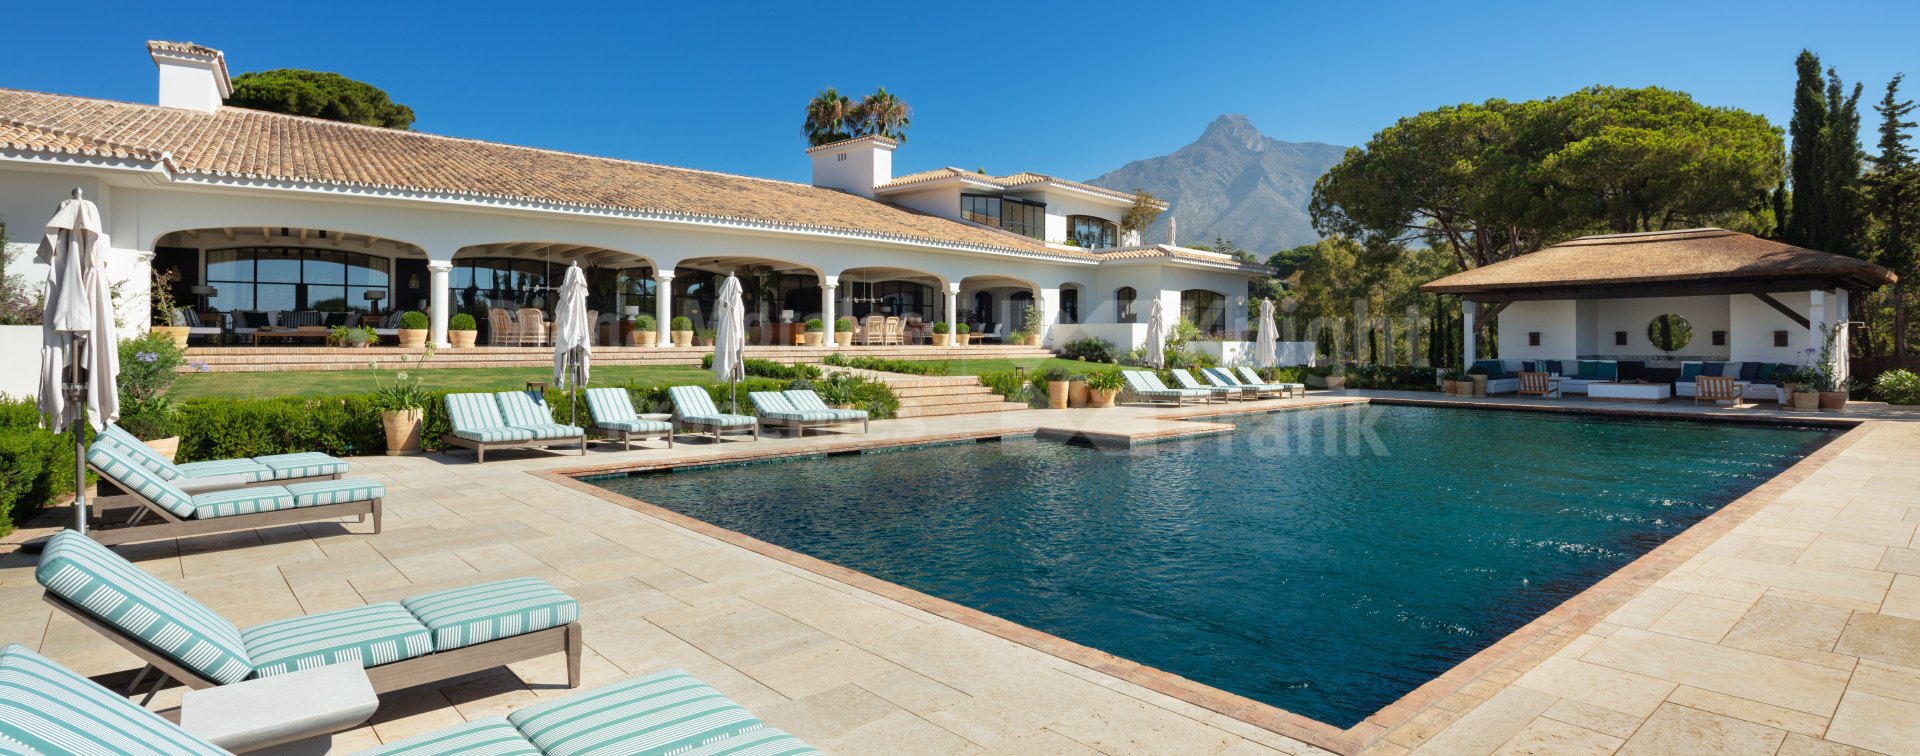 Las Lomas del Marbella Club, Villa mit Panoramablick auf das Meer im Herzen der Goldenen Meile